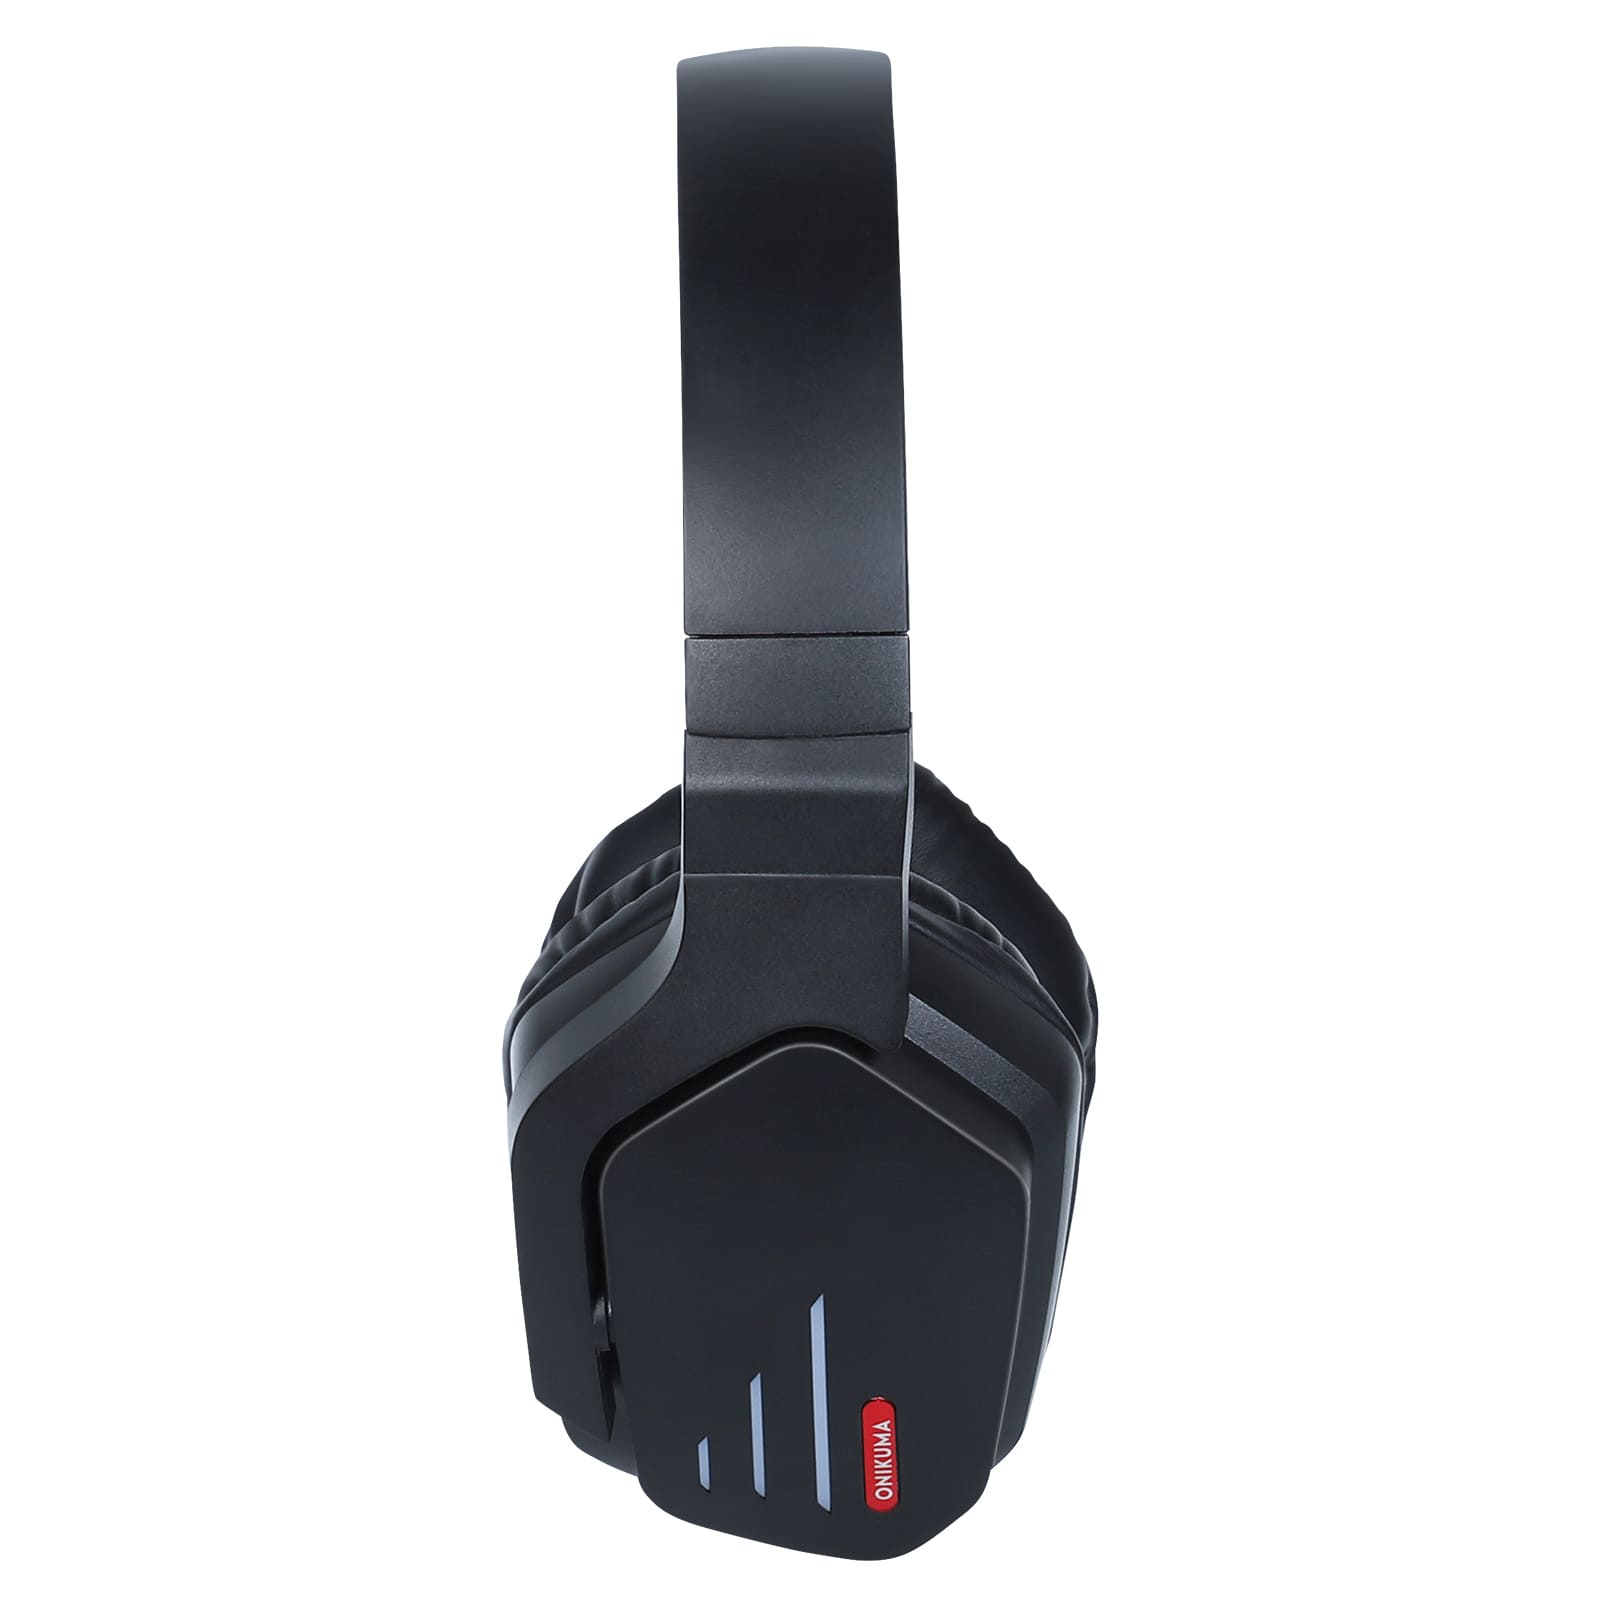 ONIKUMA B60 Wireless Bluetooth Gaming Headset